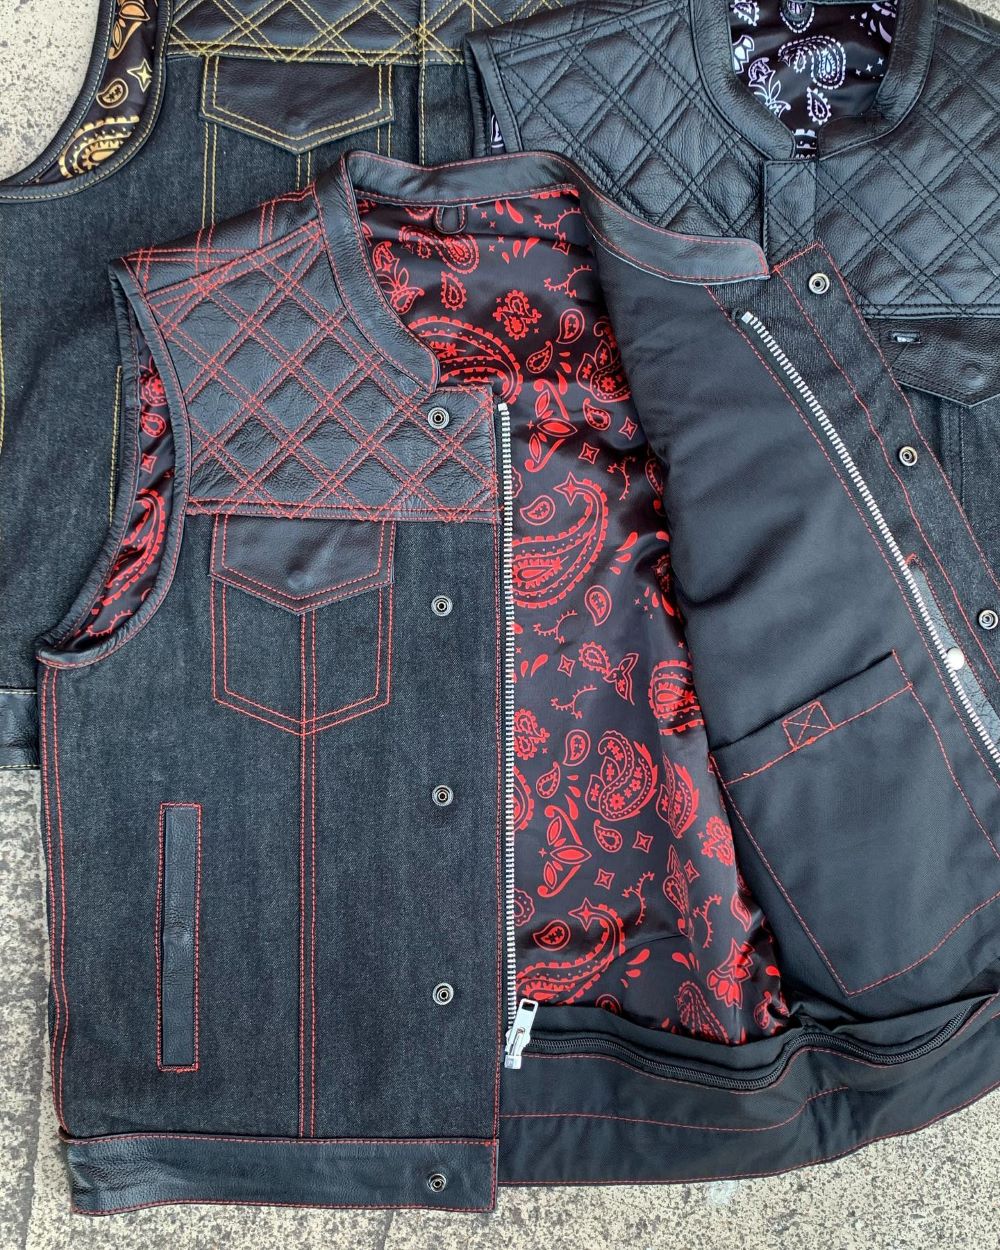 'Unik' Men's Paisley Lined Denim-Leather Vest - Black / Red